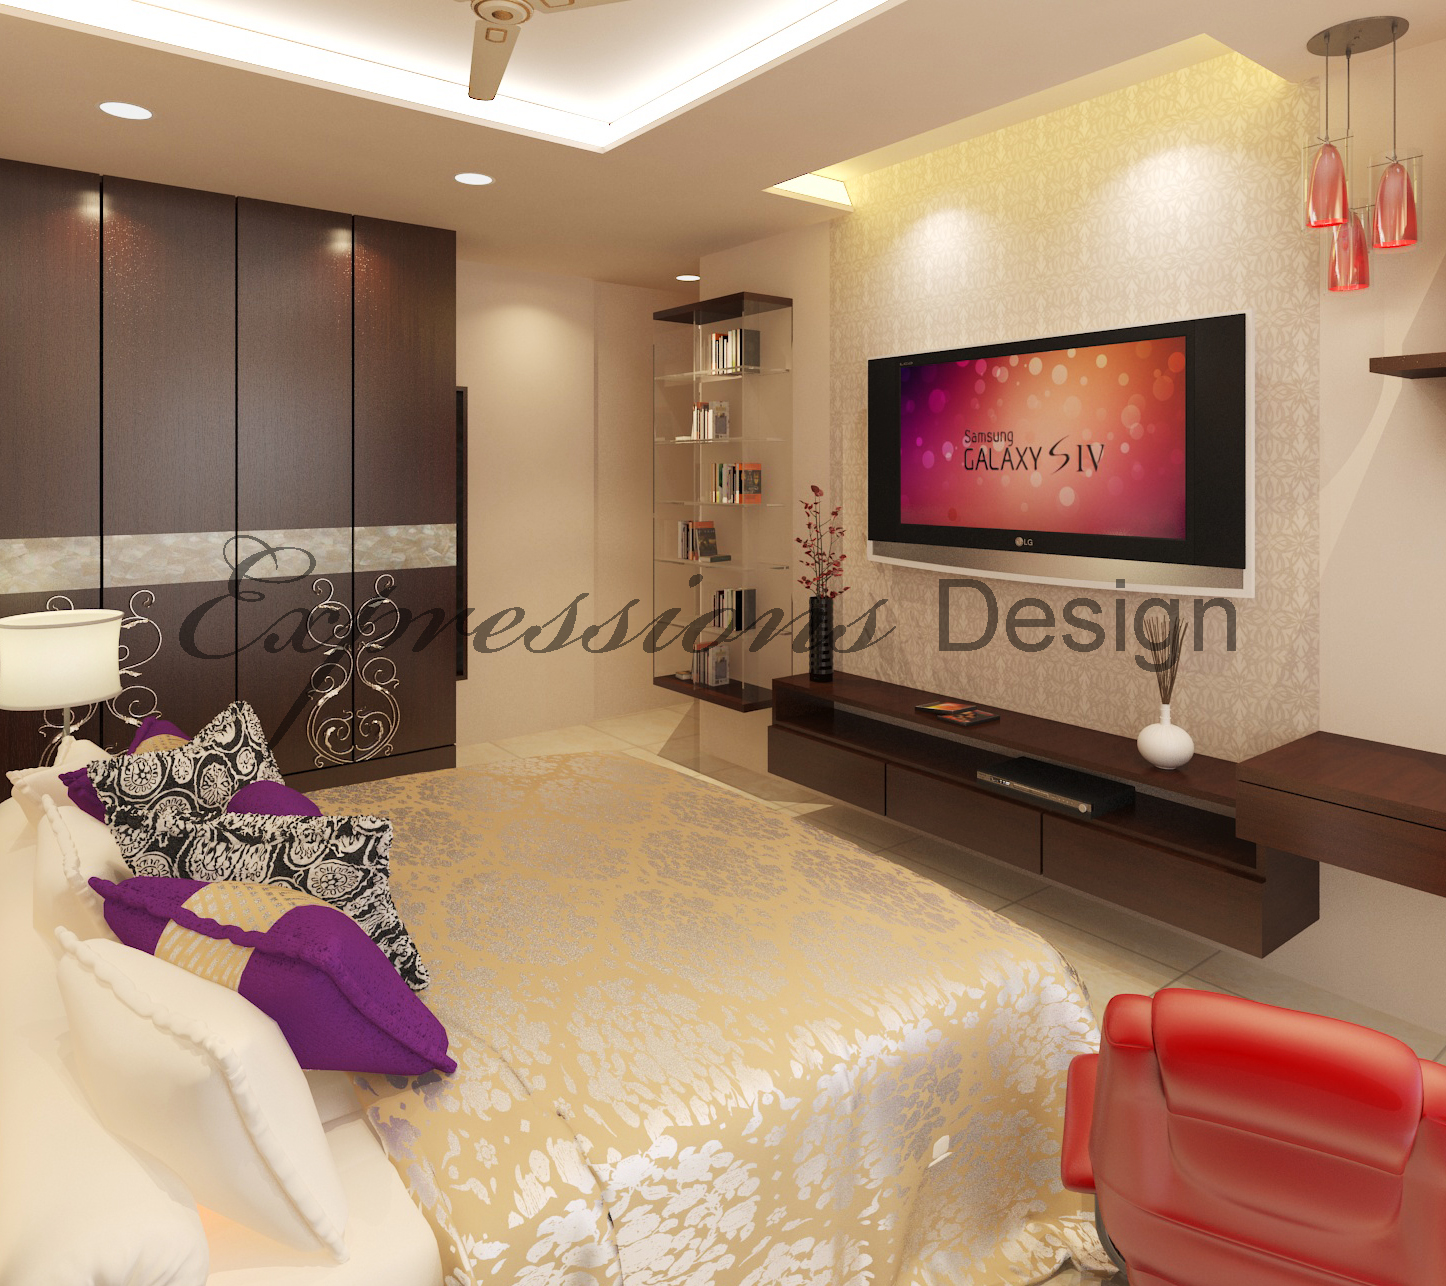 Residential Interior Design - Bedroom P3Pic3